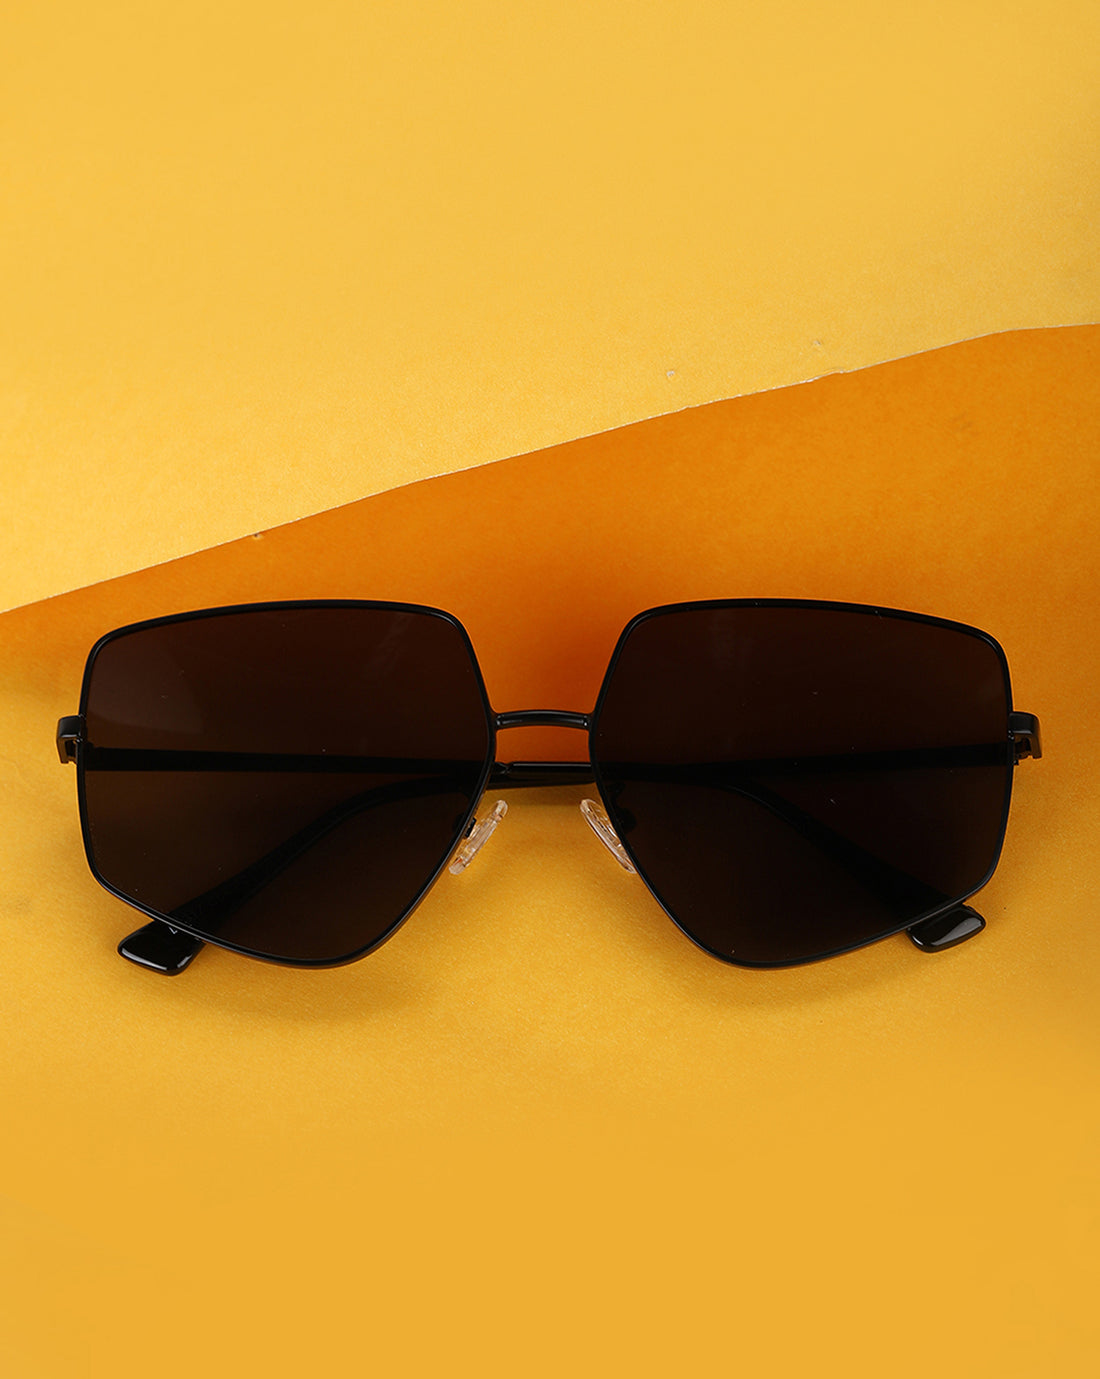 Carlton London Black Toned Black Polarised And Uv Protected Lens Unique/Distinctive Sunglasses For Women